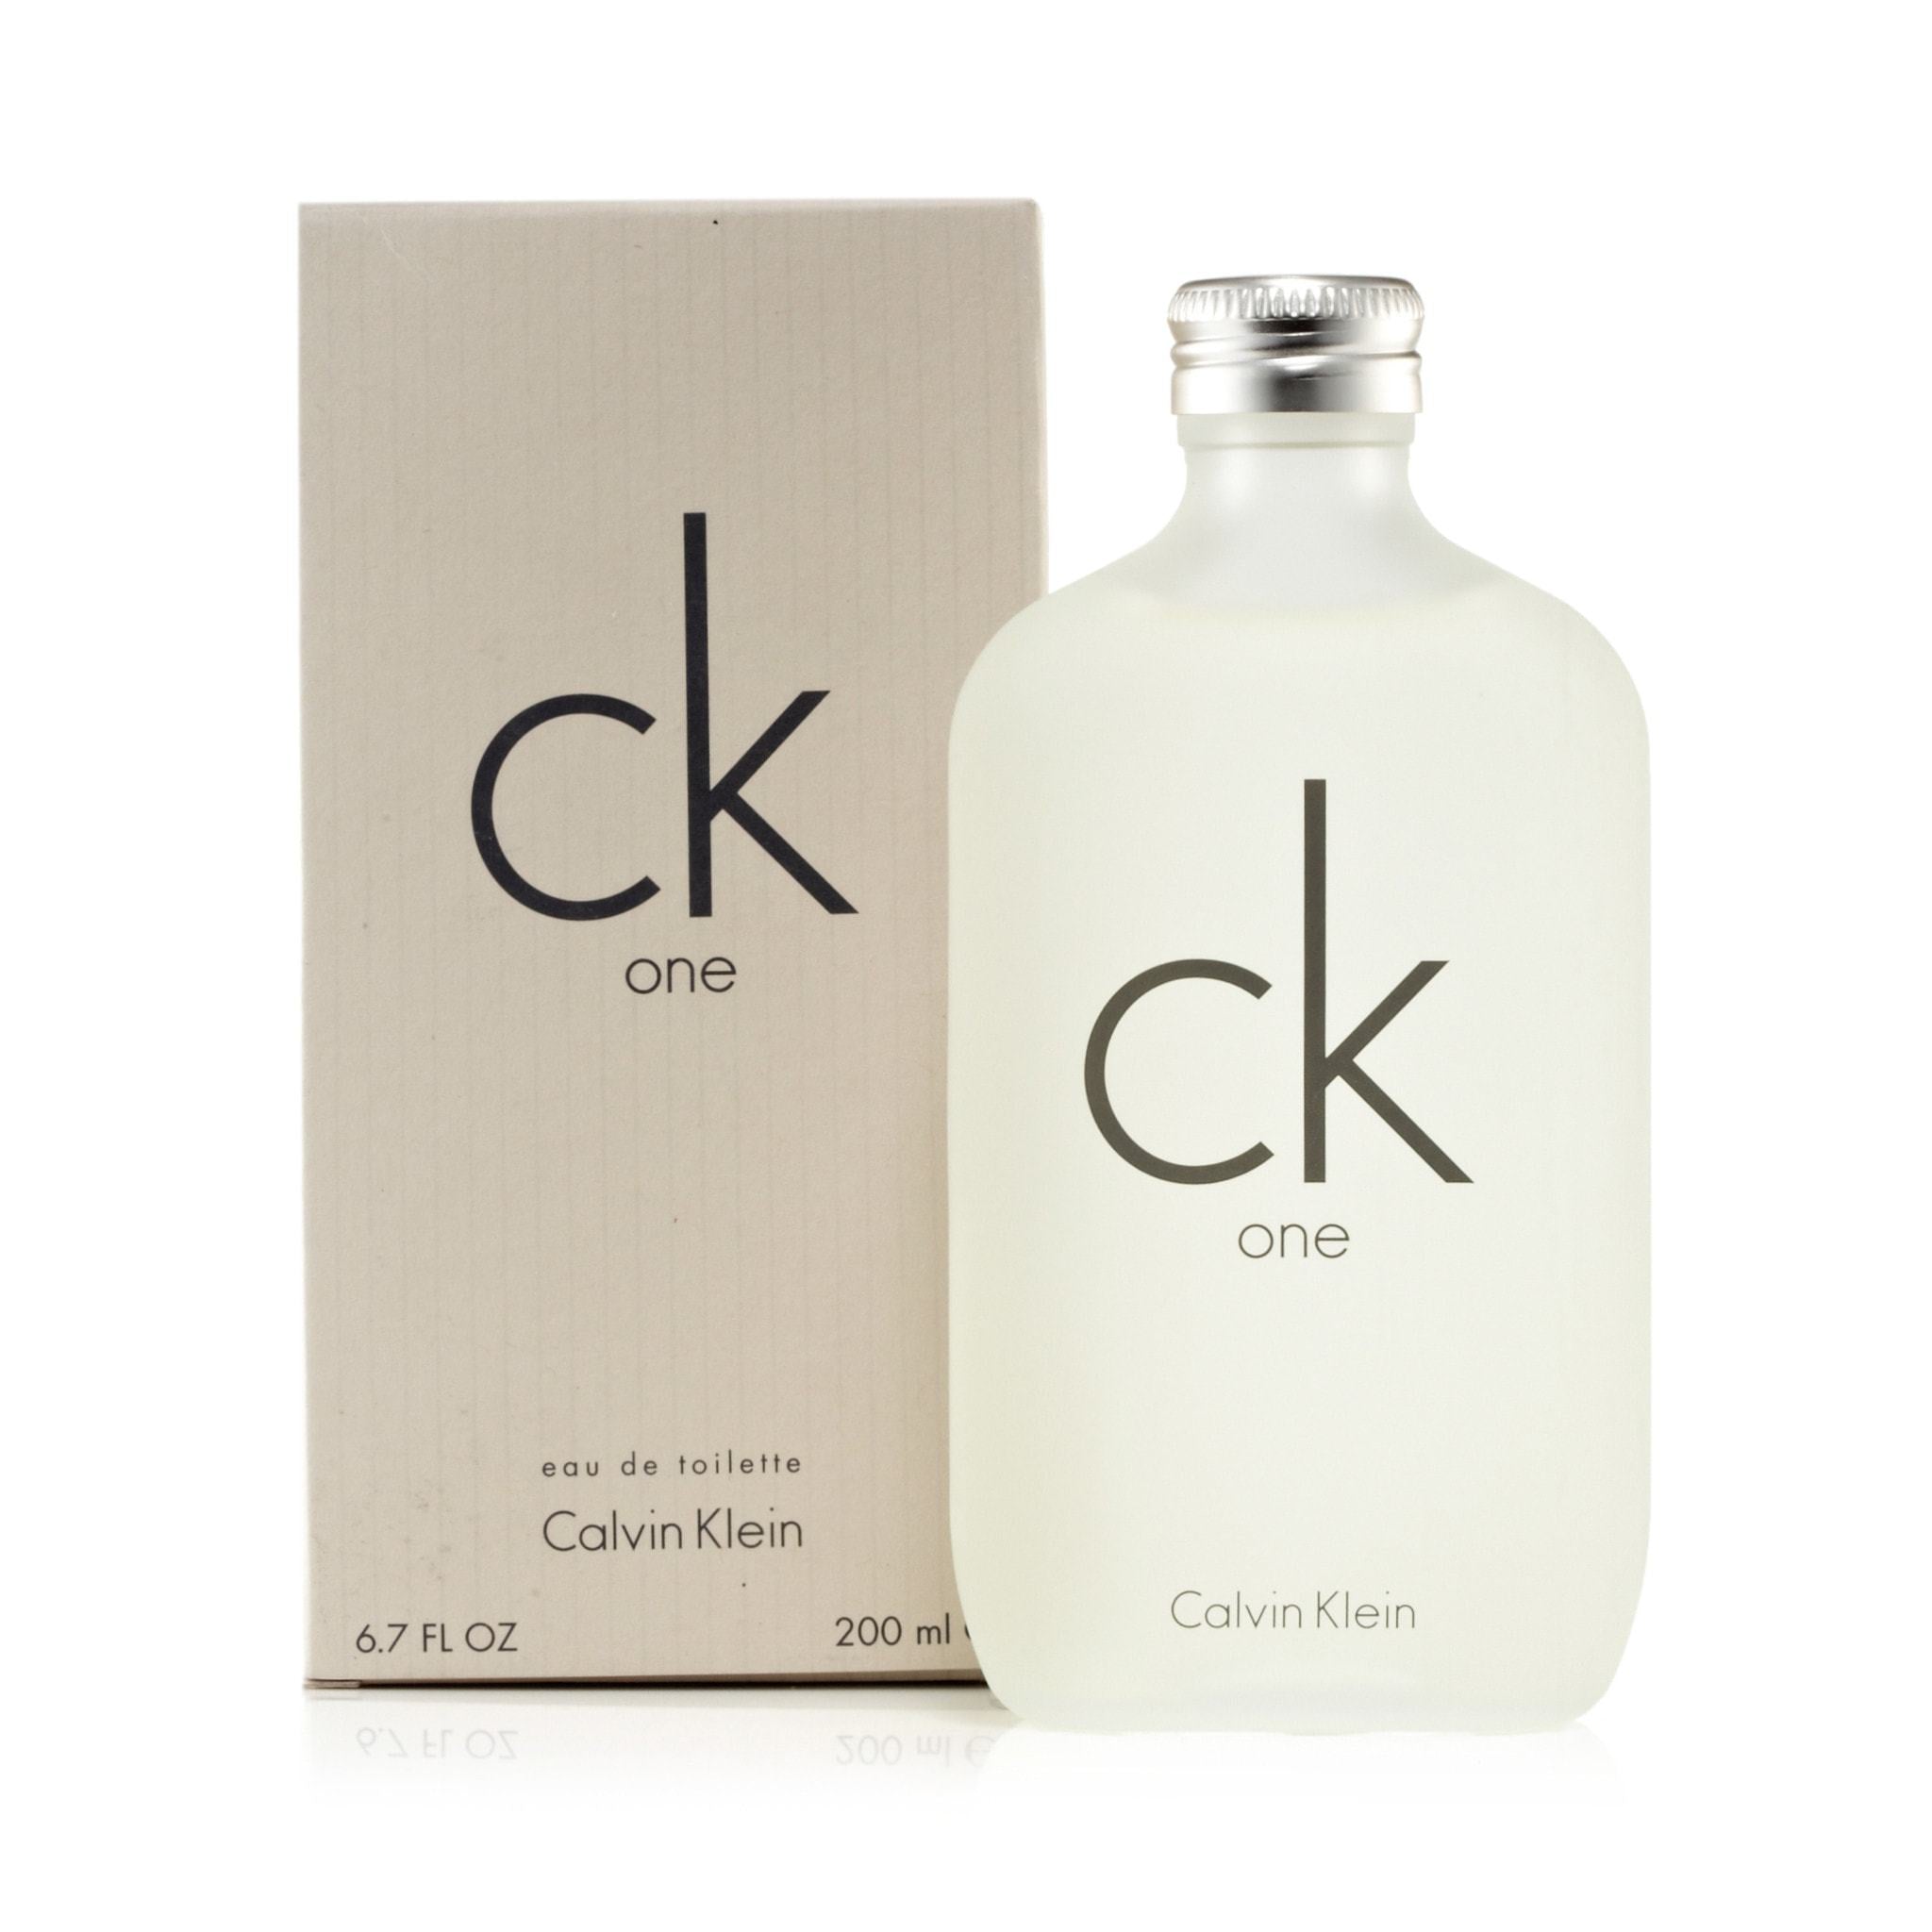 Handschrift Pacifische eilanden Soepel CK One For Women And Men By Calvin Klein Eau De Toilette Spray – Perfumania